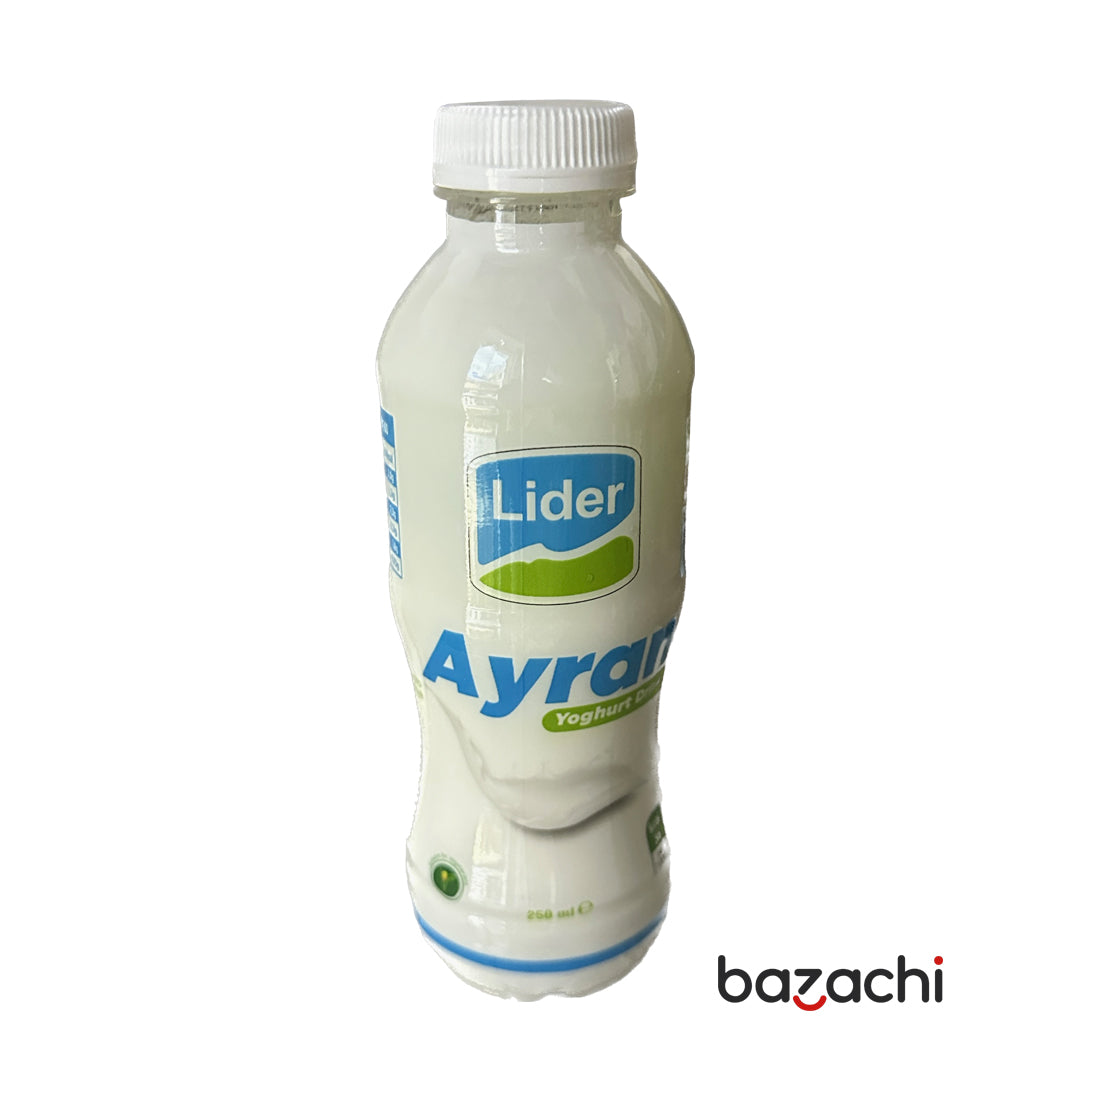 Lider Ayran - Natural Yoghurt Drink 250ml